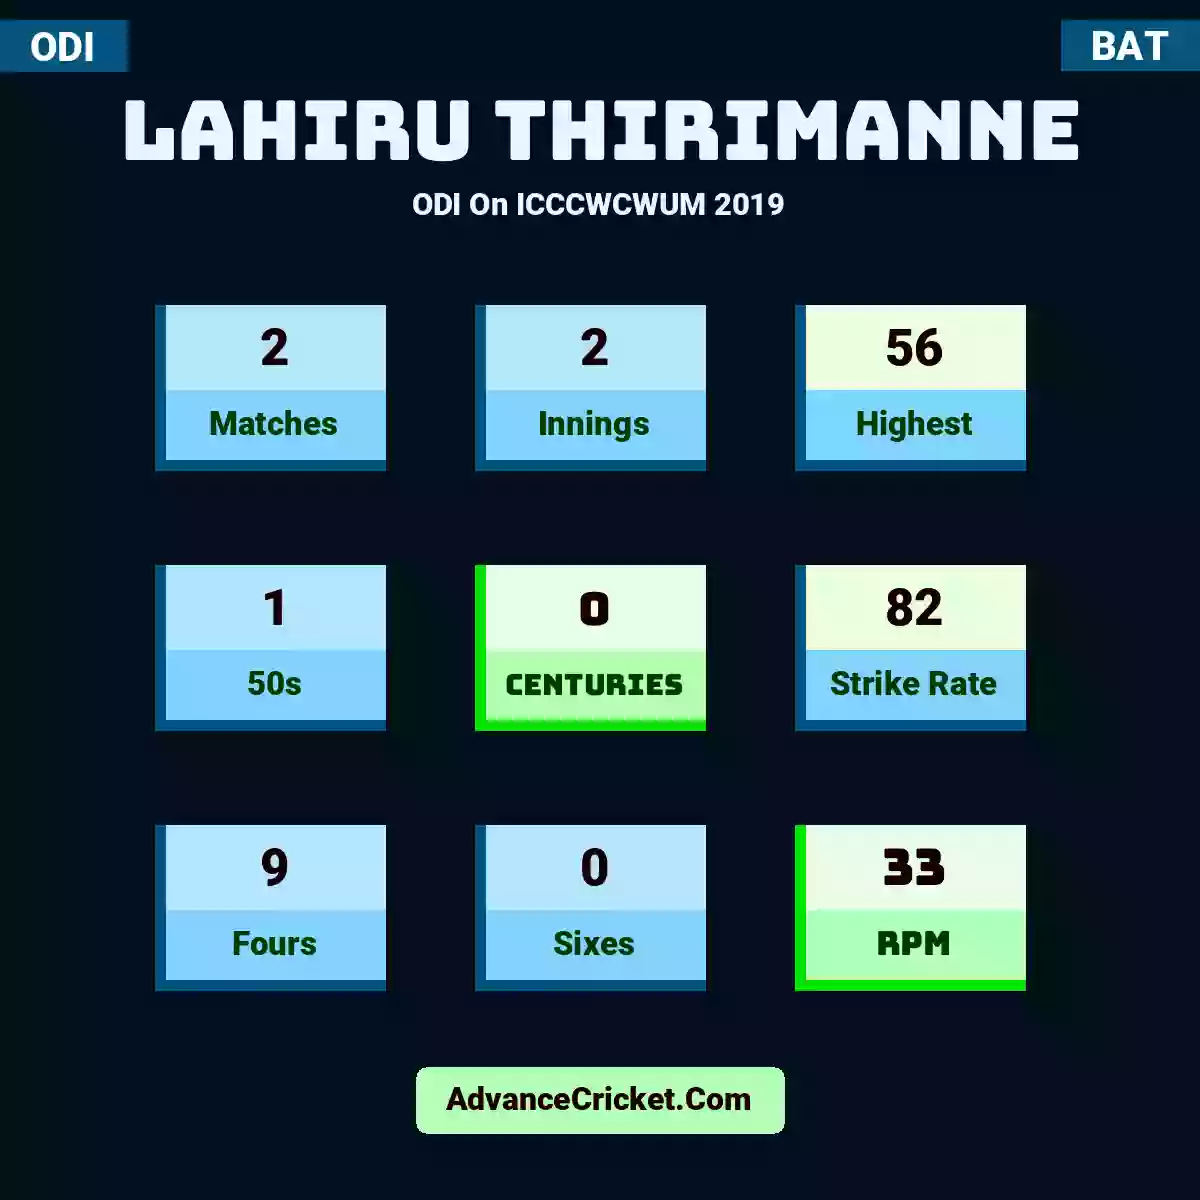 Lahiru Thirimanne ODI  On ICCCWCWUM 2019, Lahiru Thirimanne played 2 matches, scored 56 runs as highest, 1 half-centuries, and 0 centuries, with a strike rate of 82. L.Thirimanne hit 9 fours and 0 sixes, with an RPM of 33.